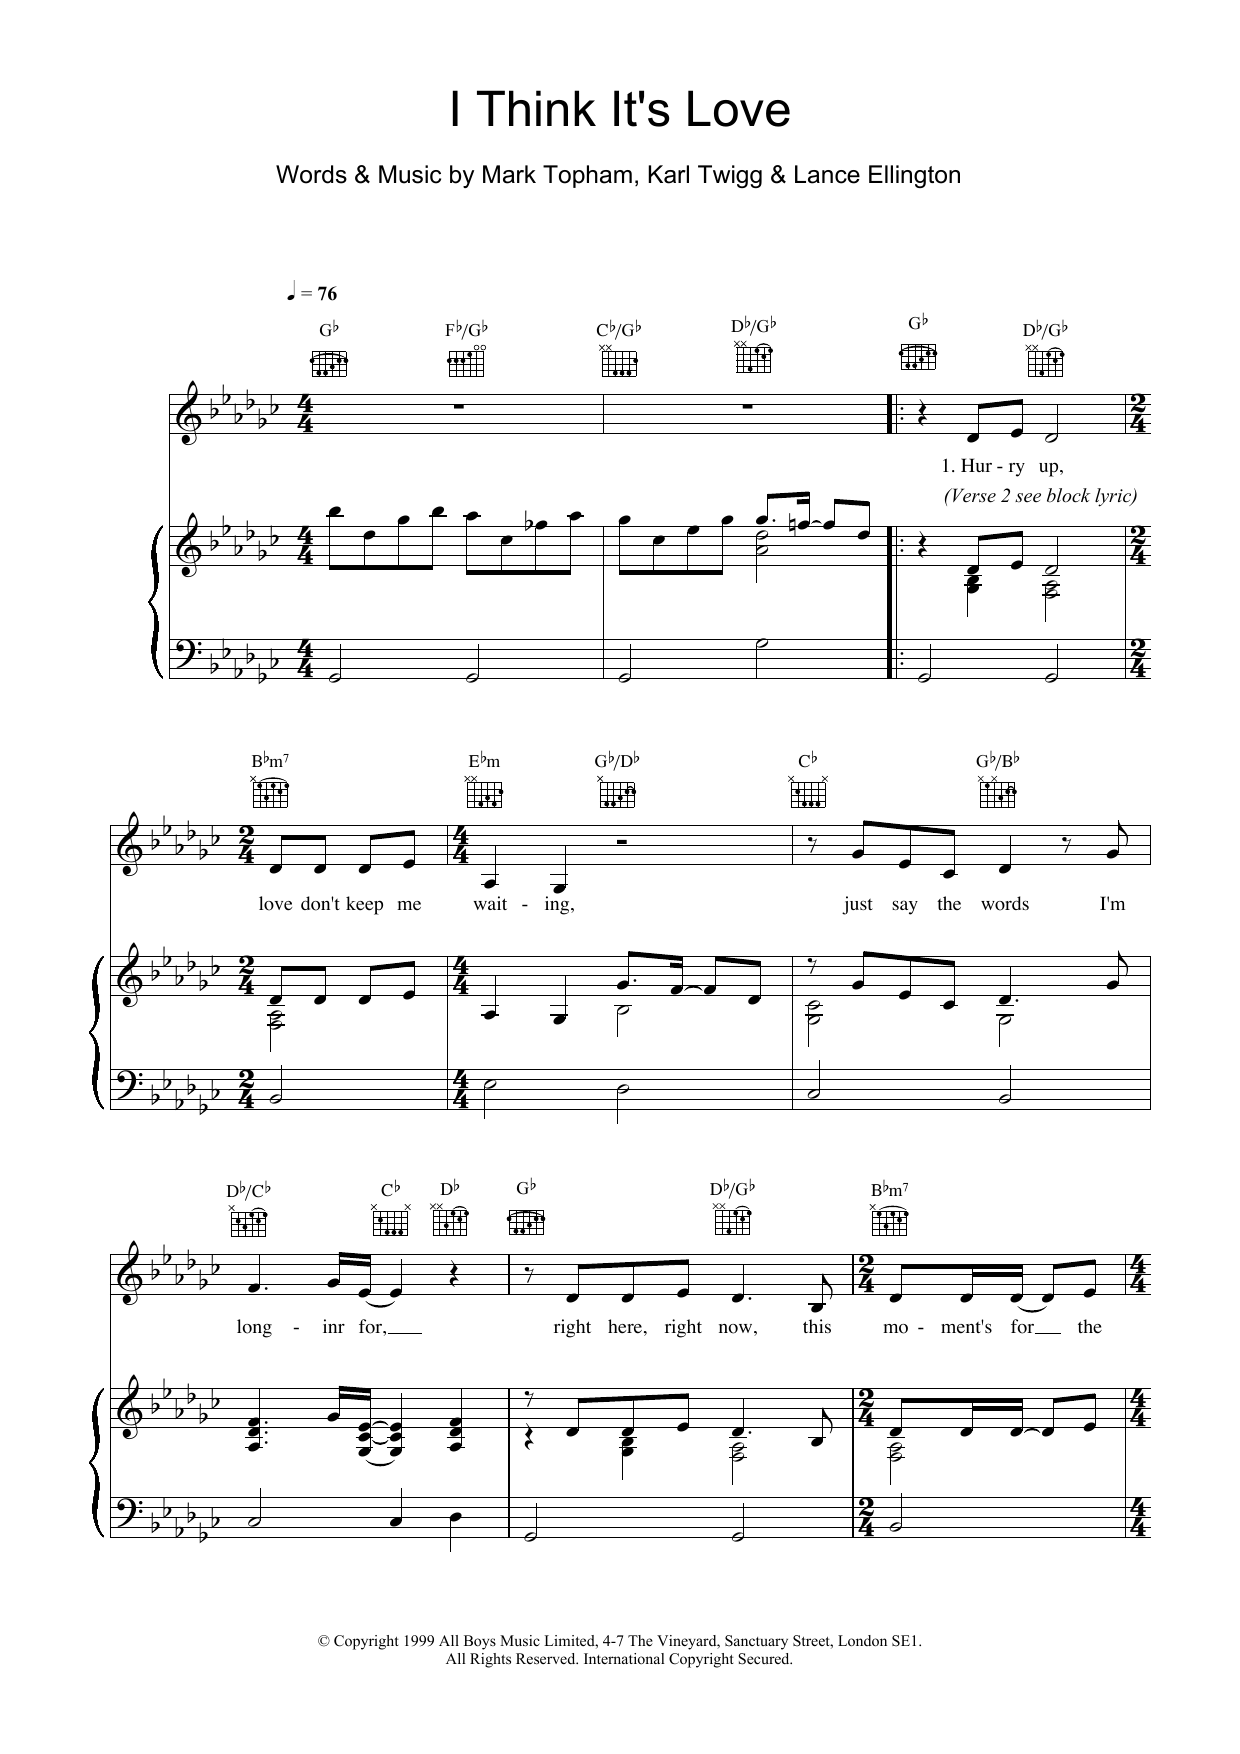 Steps I Think It's Love sheet music notes printable PDF score